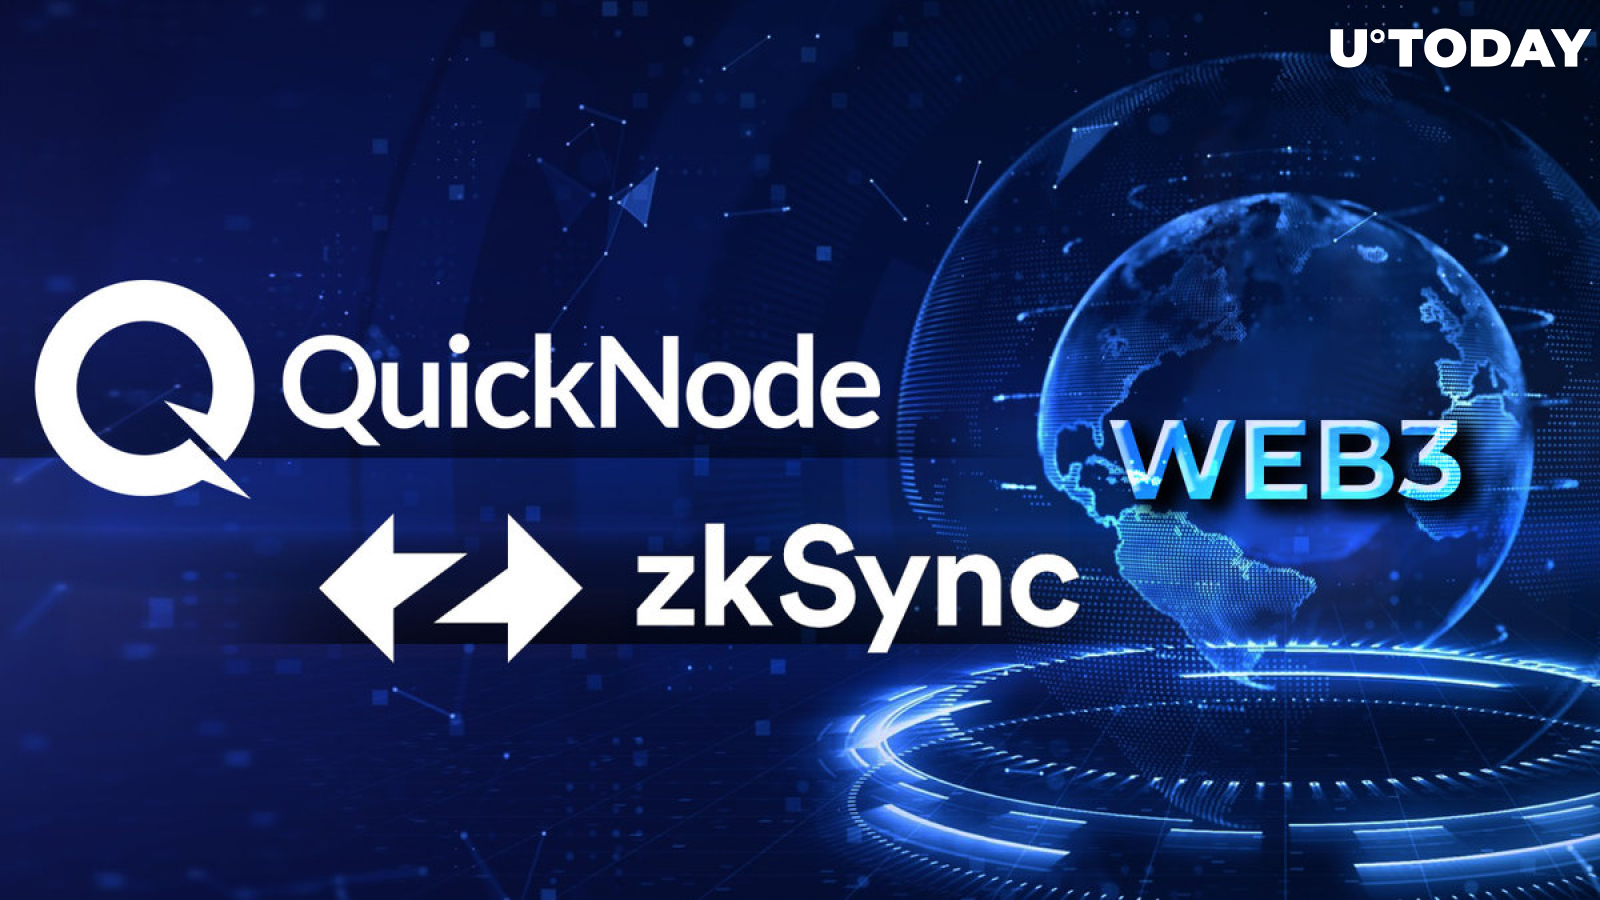 QuickNode Web3 Infrastructure Vendor Adds zkSync Hyperchain Support